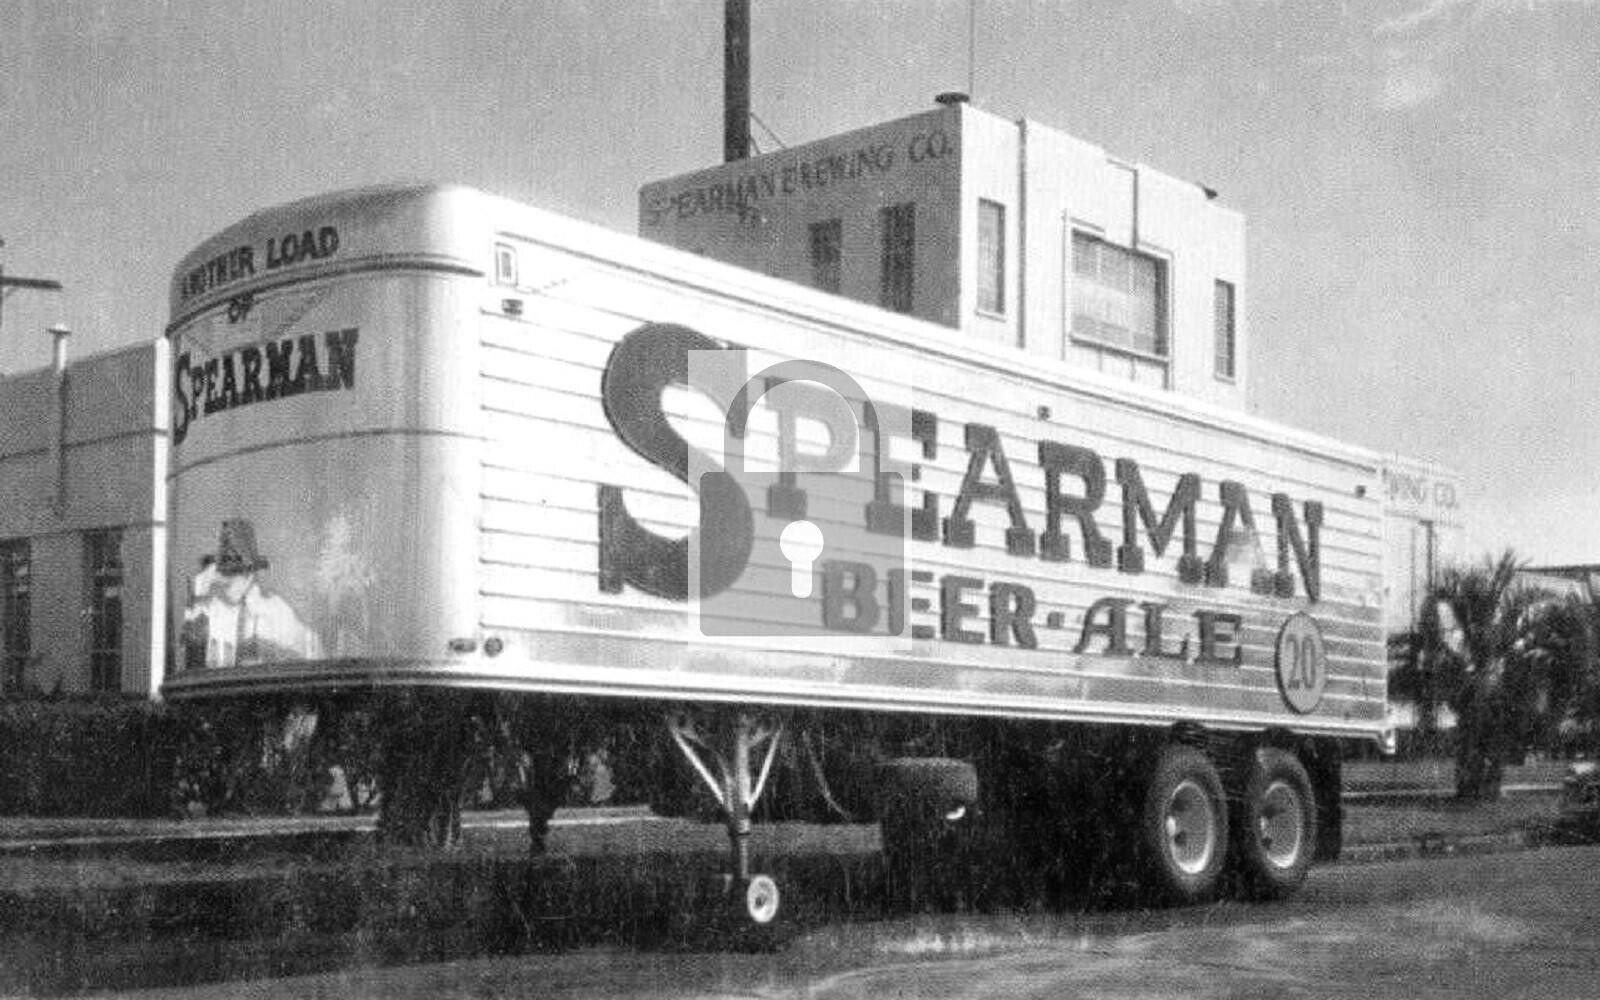 Spearman Beer Brewing Company Factory Pensacola Florida FL Reprint Postcard